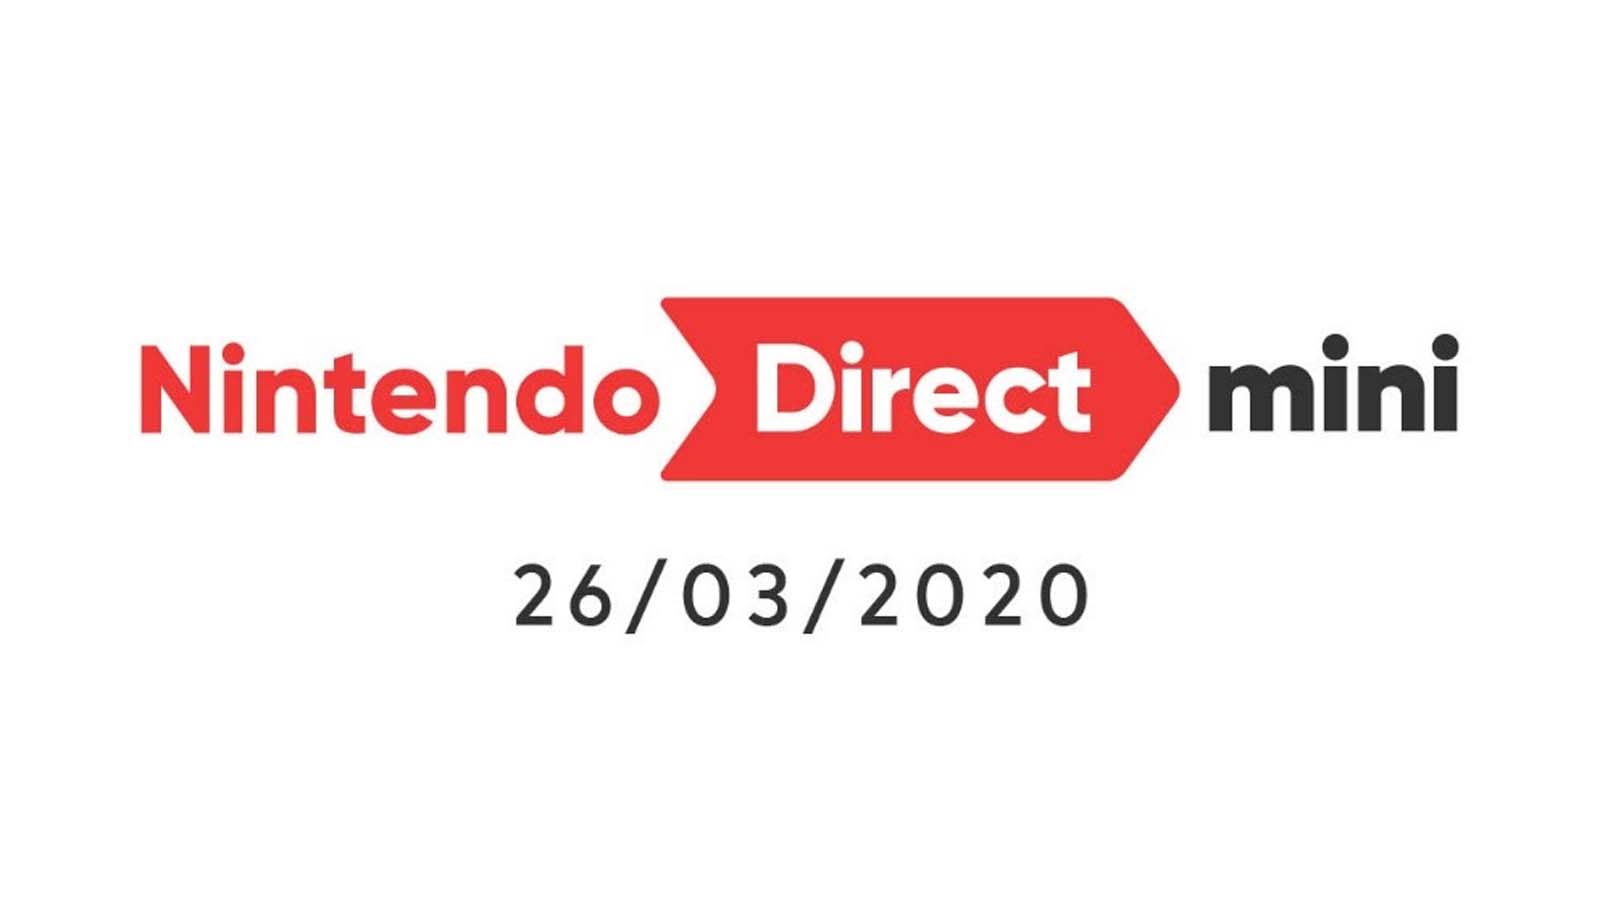 Nintendo Direct Mini presentation rundown